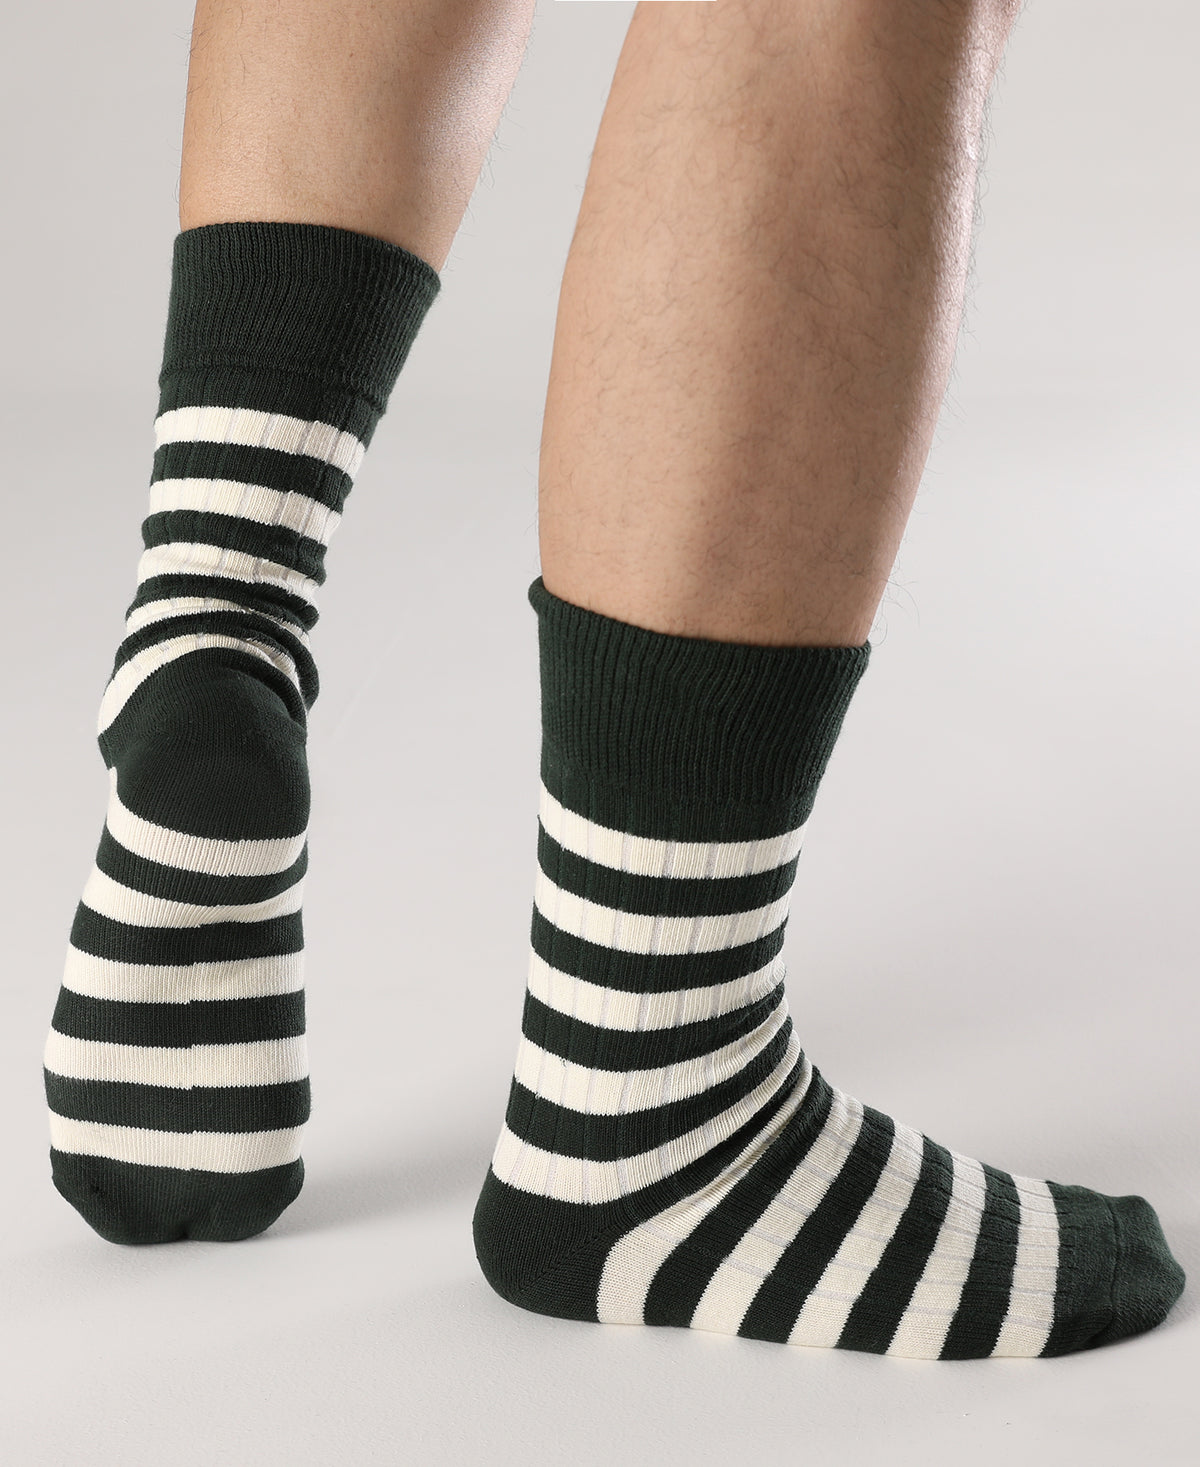 Retro Striped Cotton Socks - Green/White